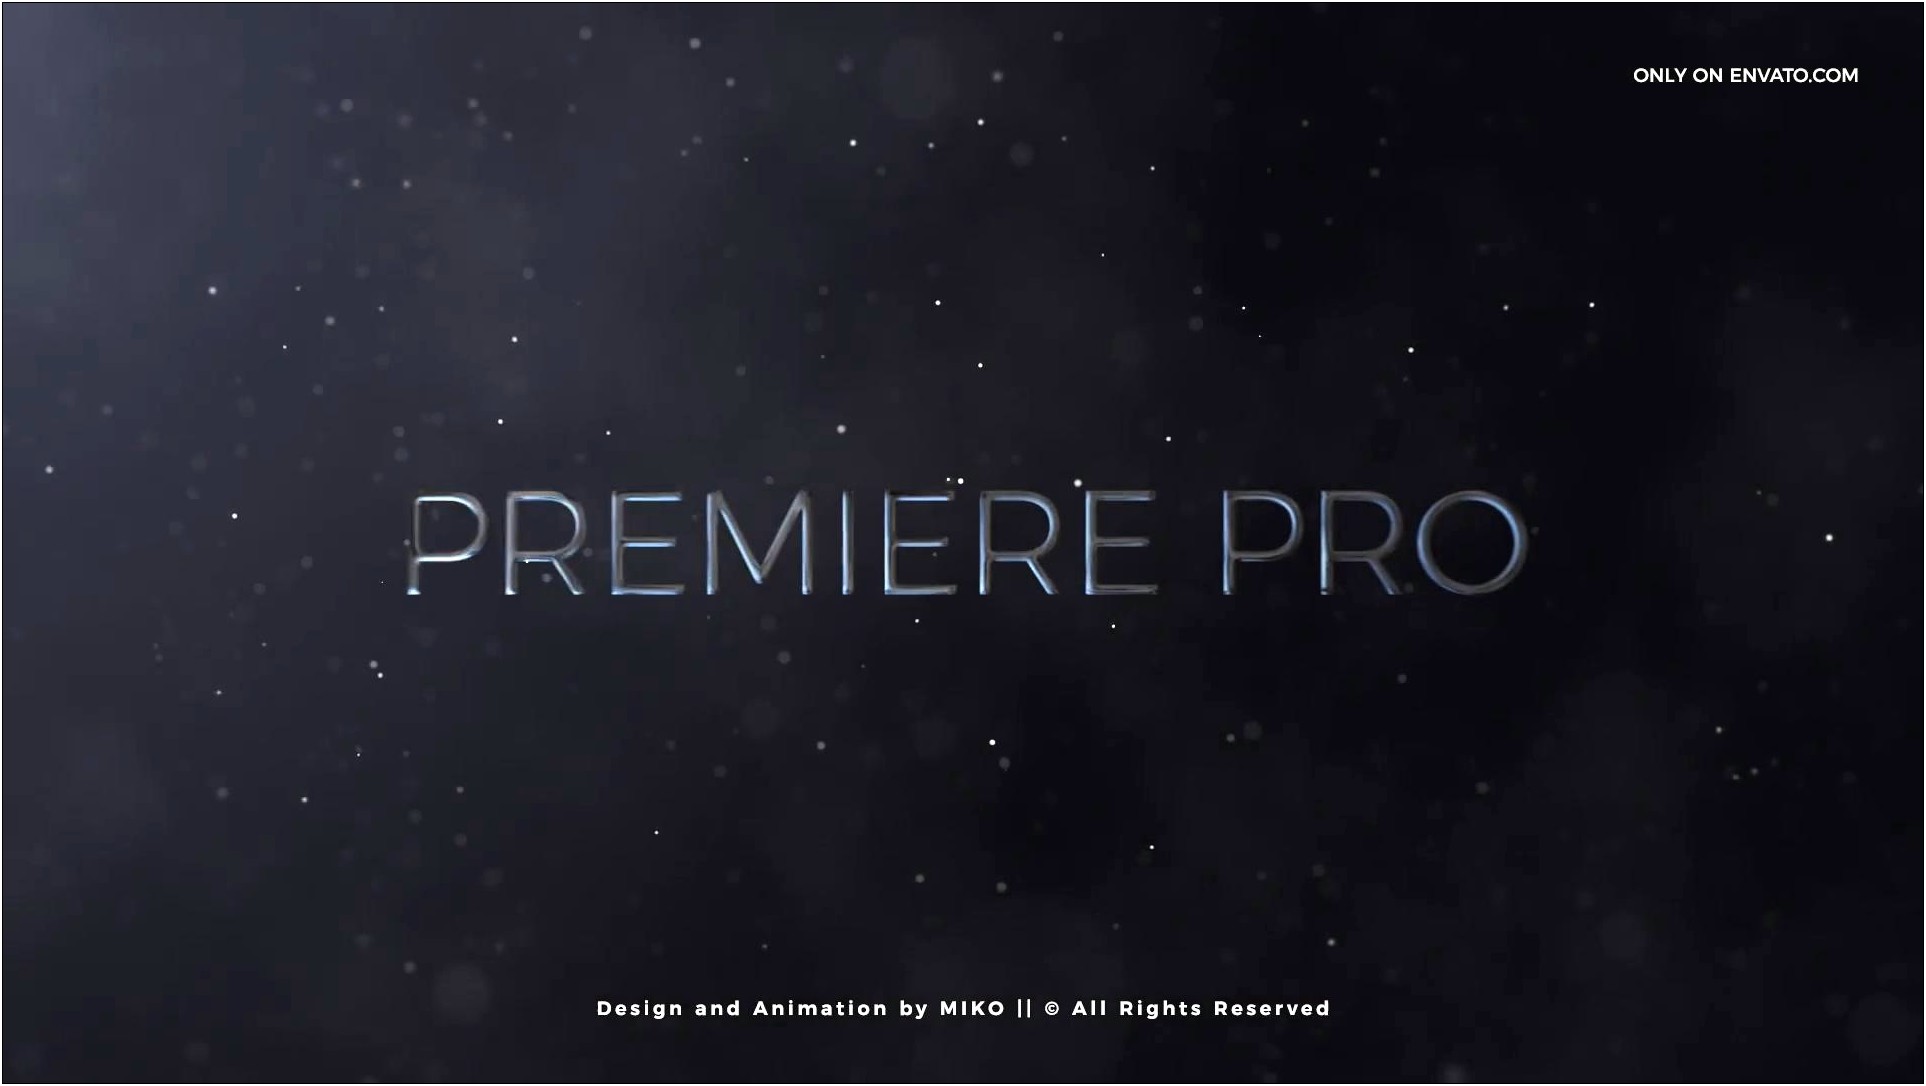 Free Download Adobe Premiere Pro Title Templates